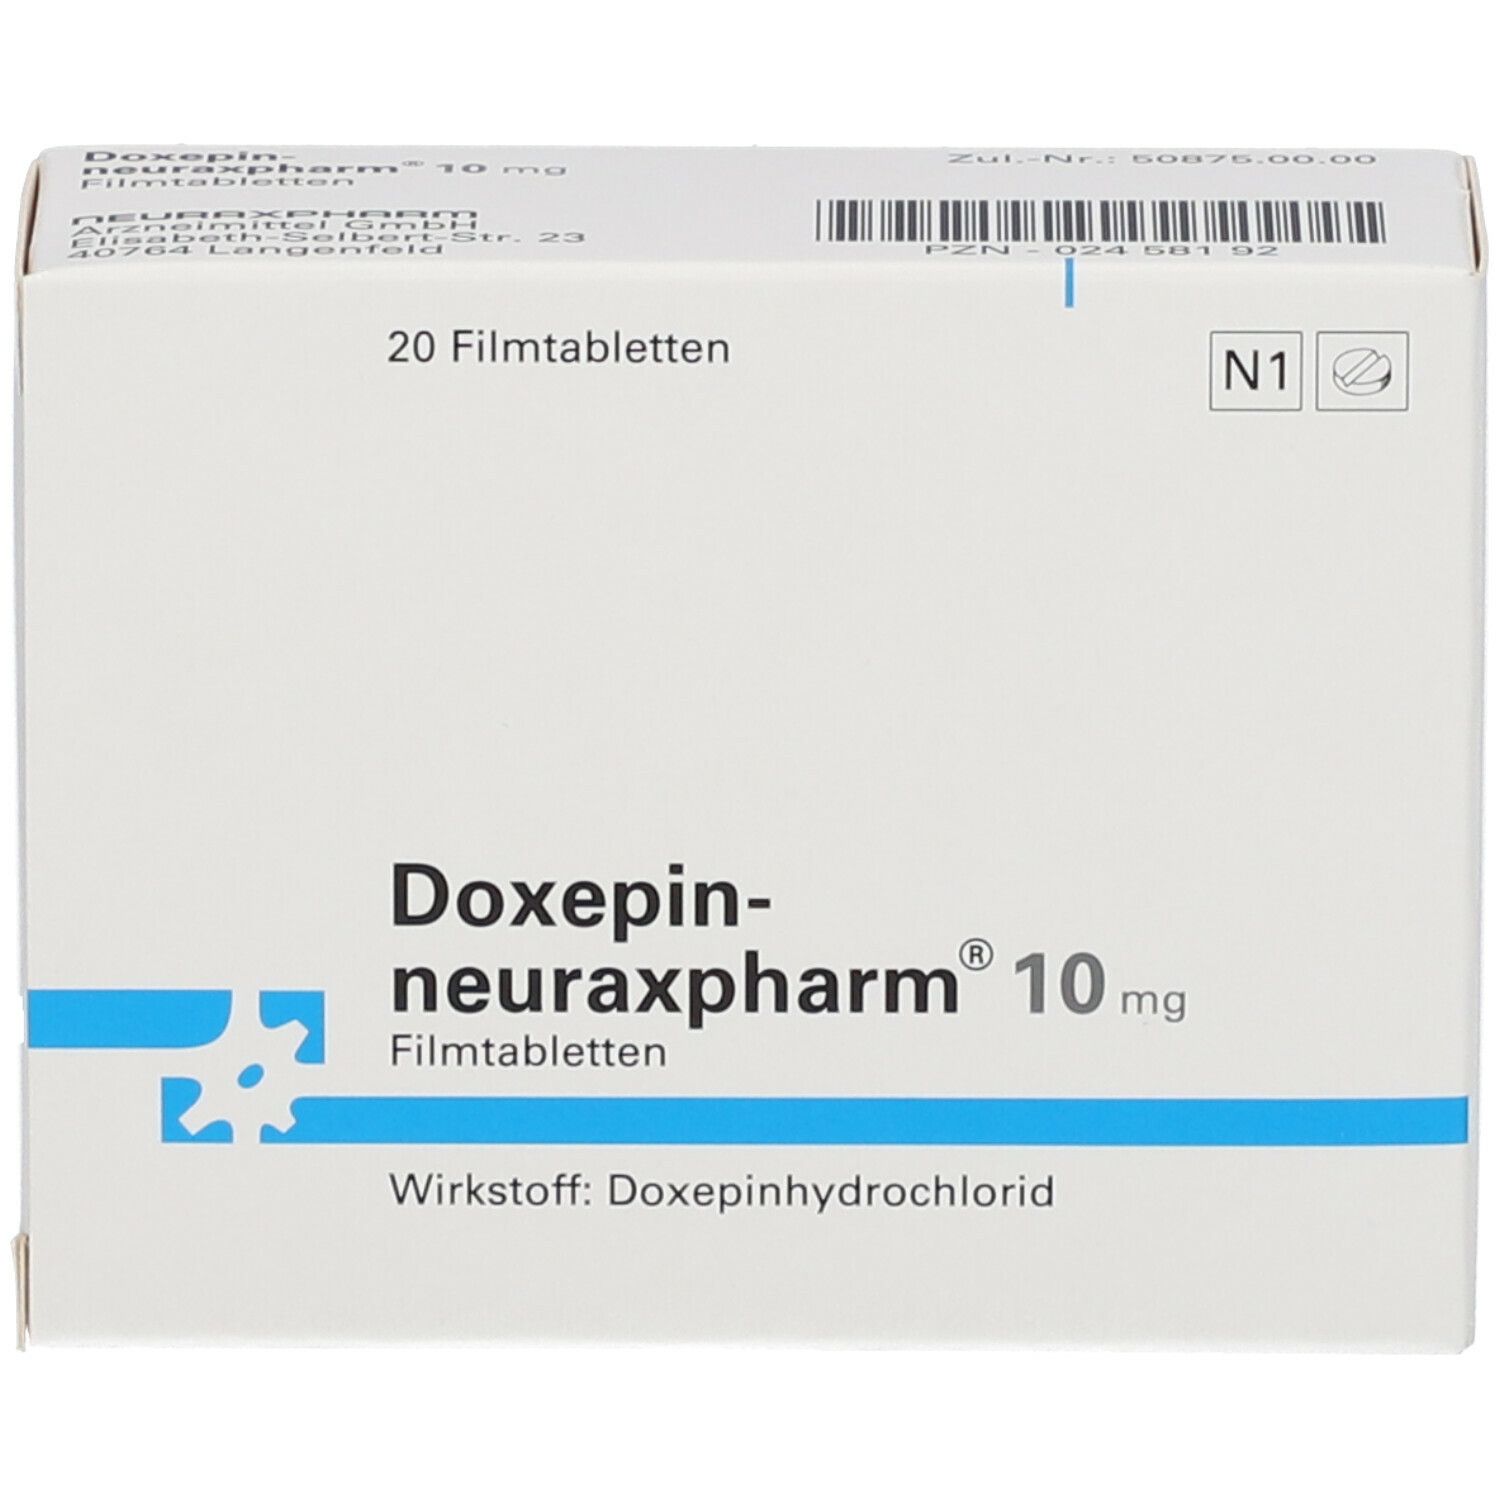 Doxepin-neuraxpharm® 10 mg